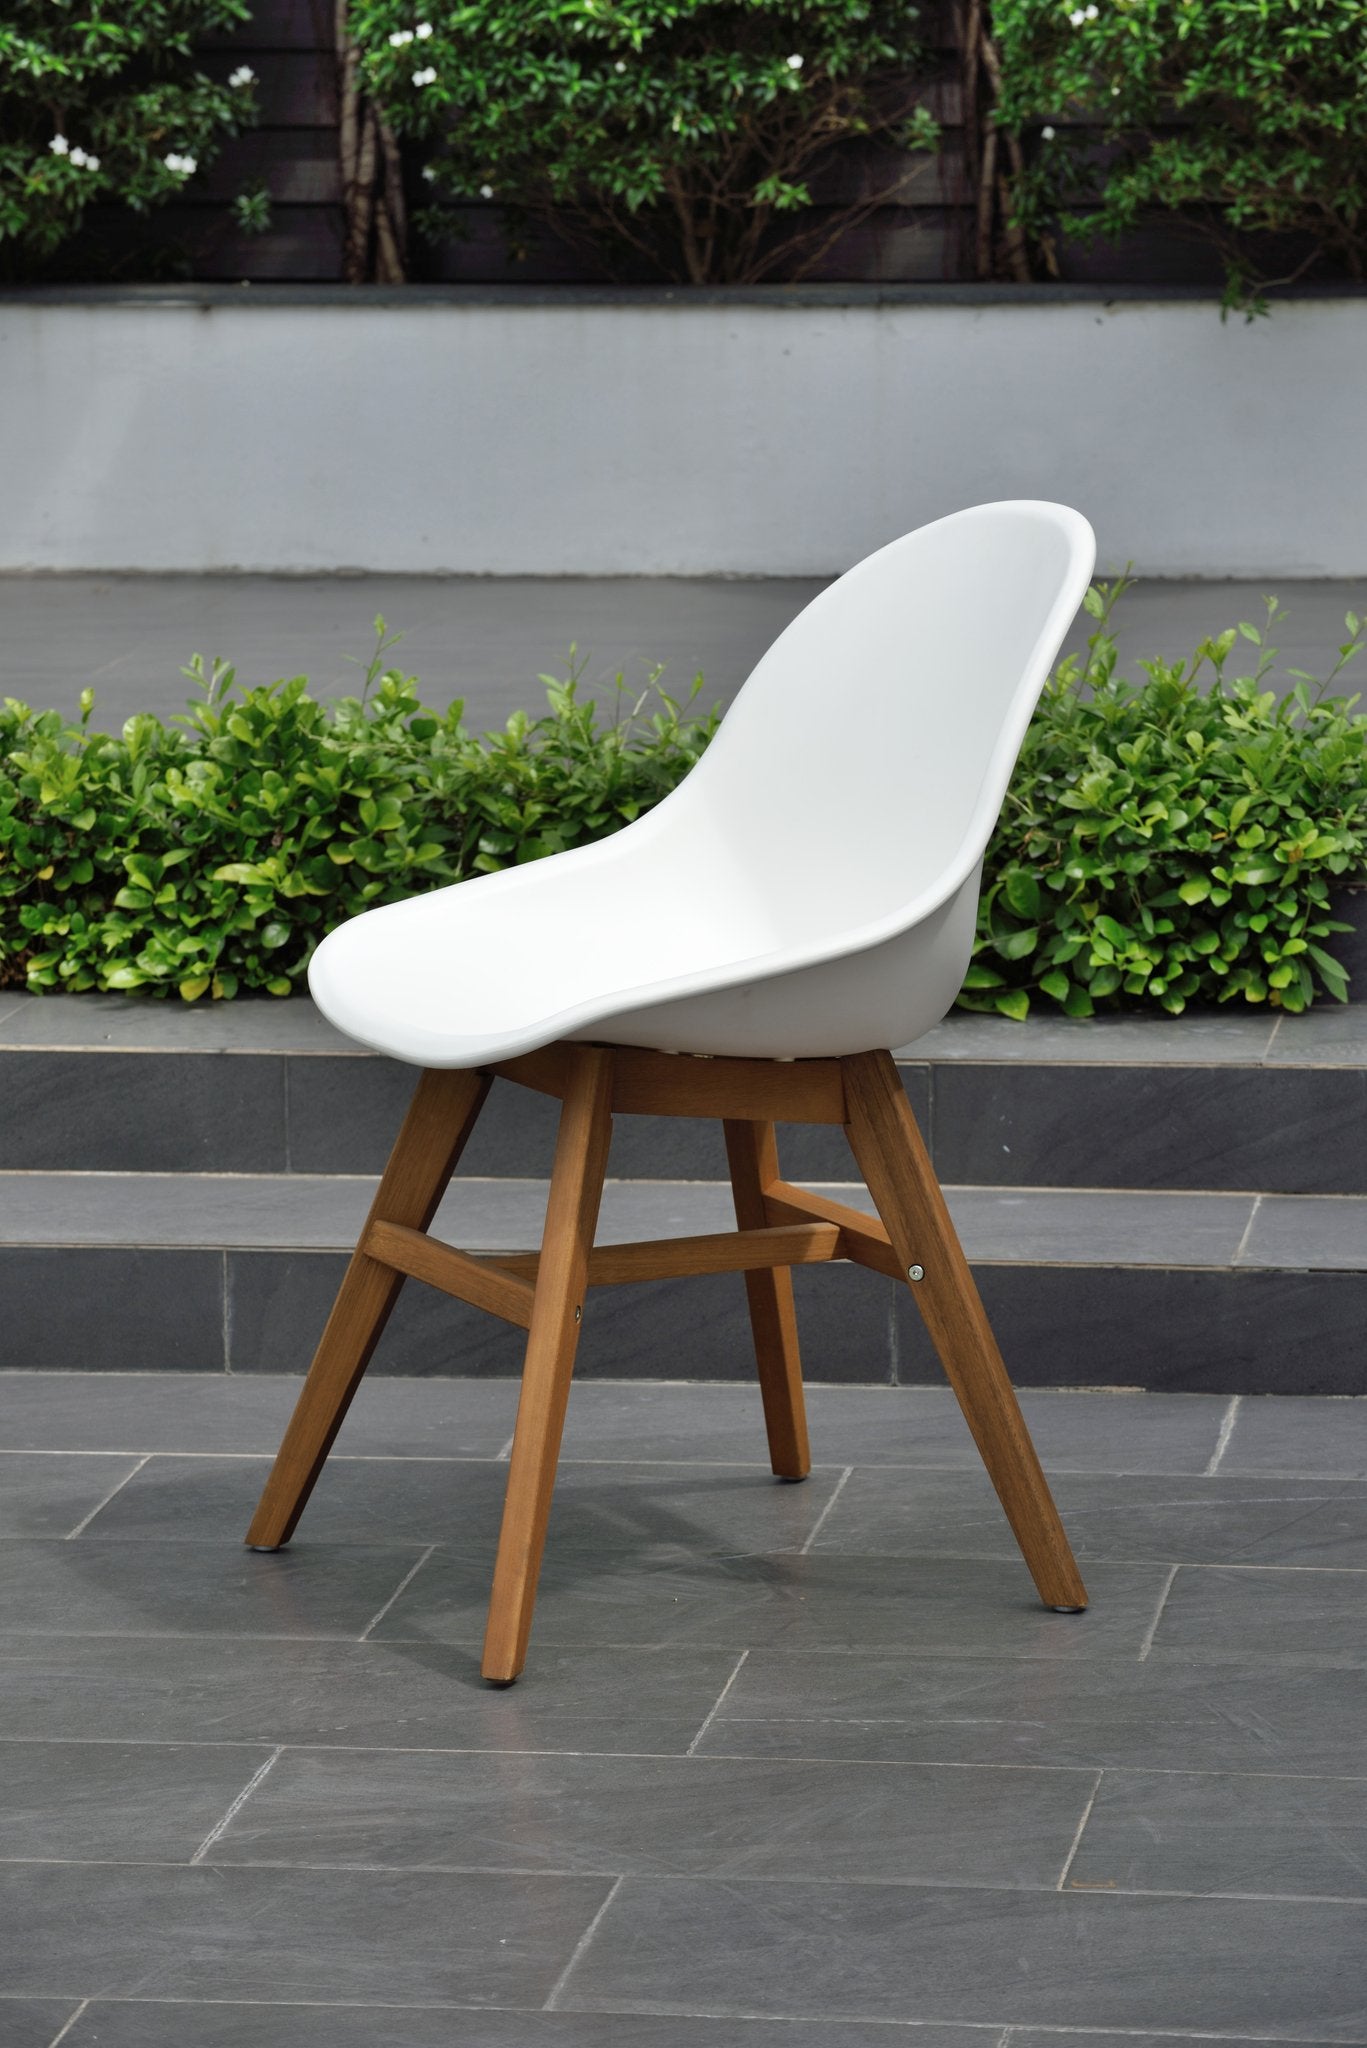 Aalborg Grey Table, 6 Concarnau Side Chair & 2 Concarnau Arm Chair